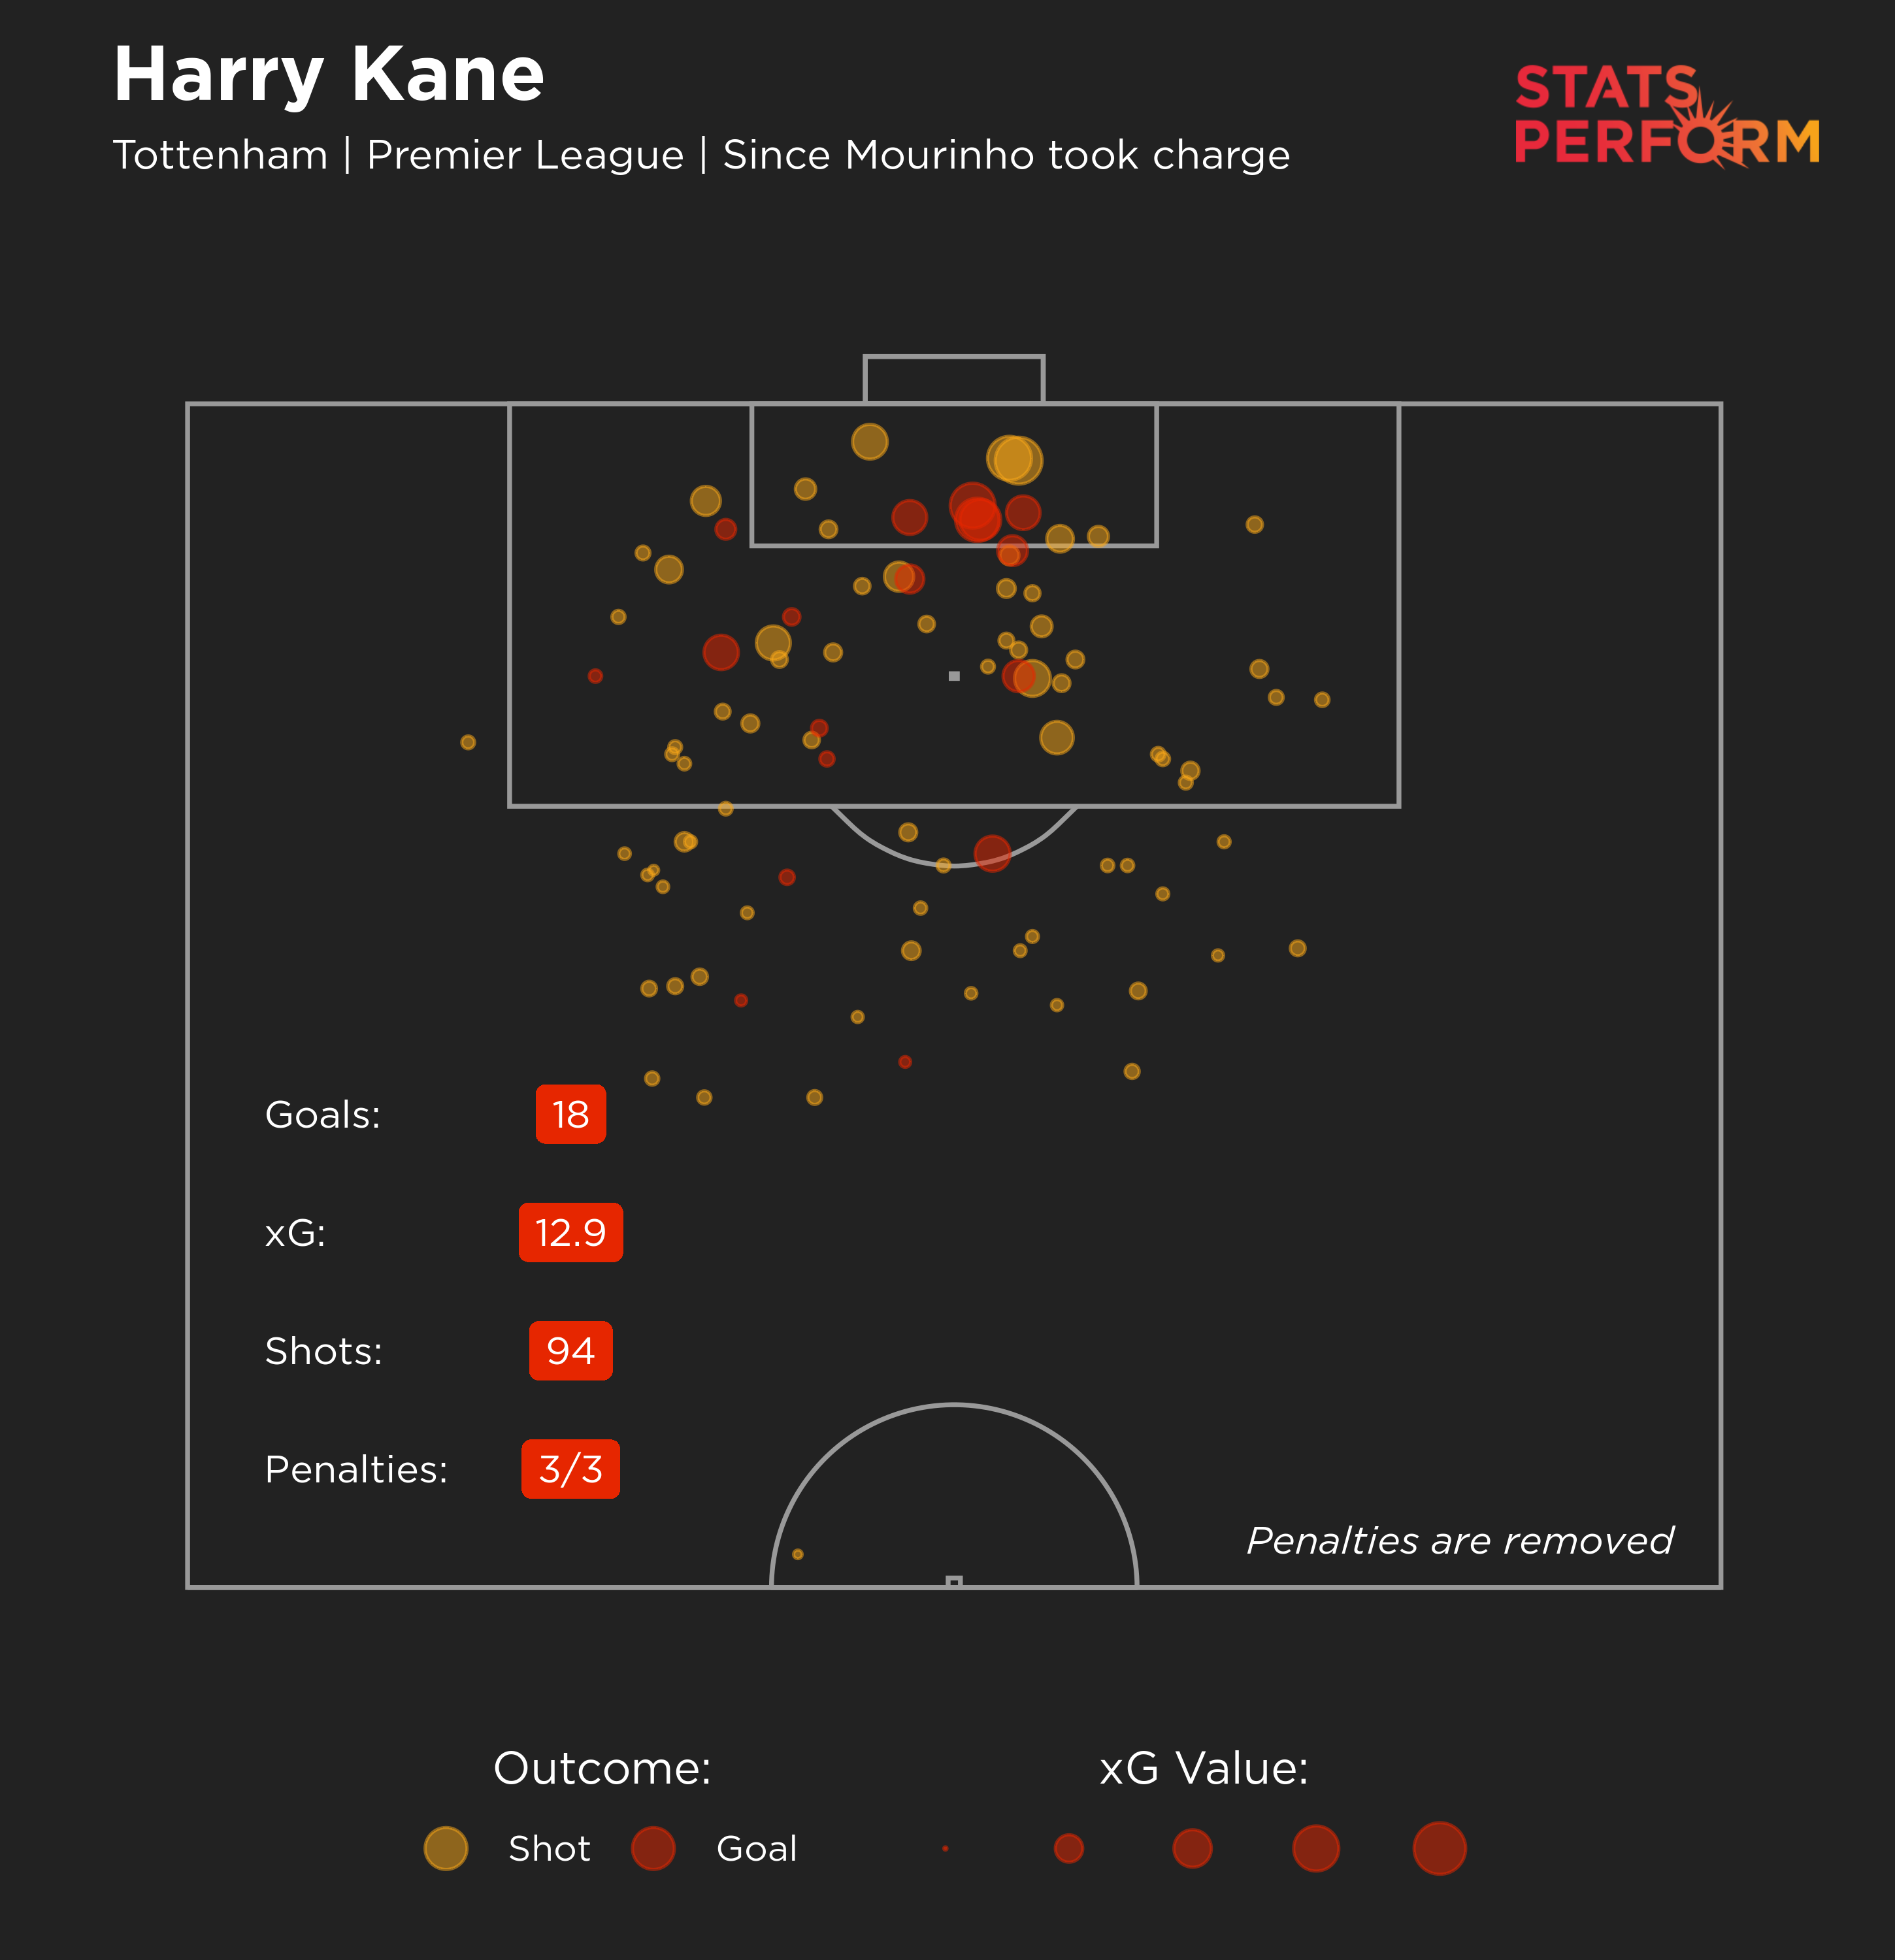 Harry Kane's expected goals maps under Jose Mourinho